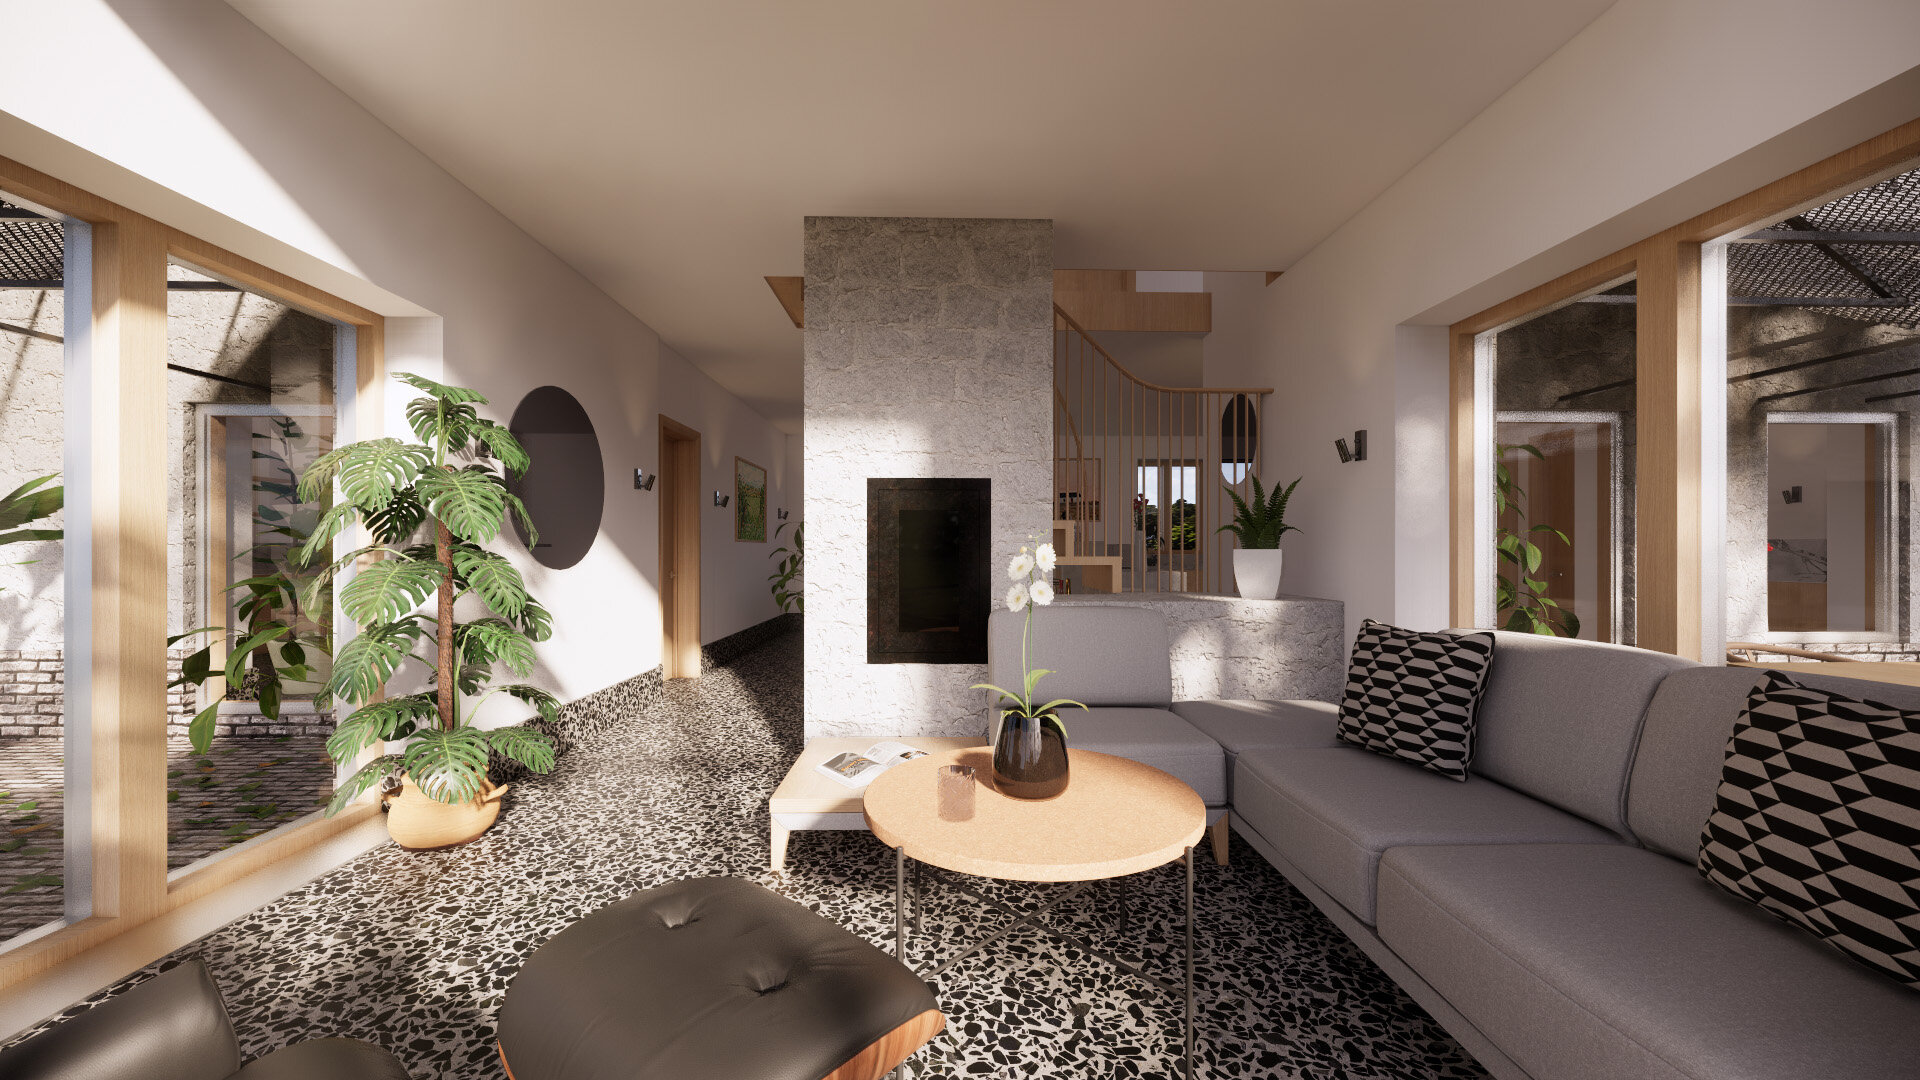 Solar Living Space - East Yorkshire Passivhaus - Bridlington Architects - Samuel Kendall Associates